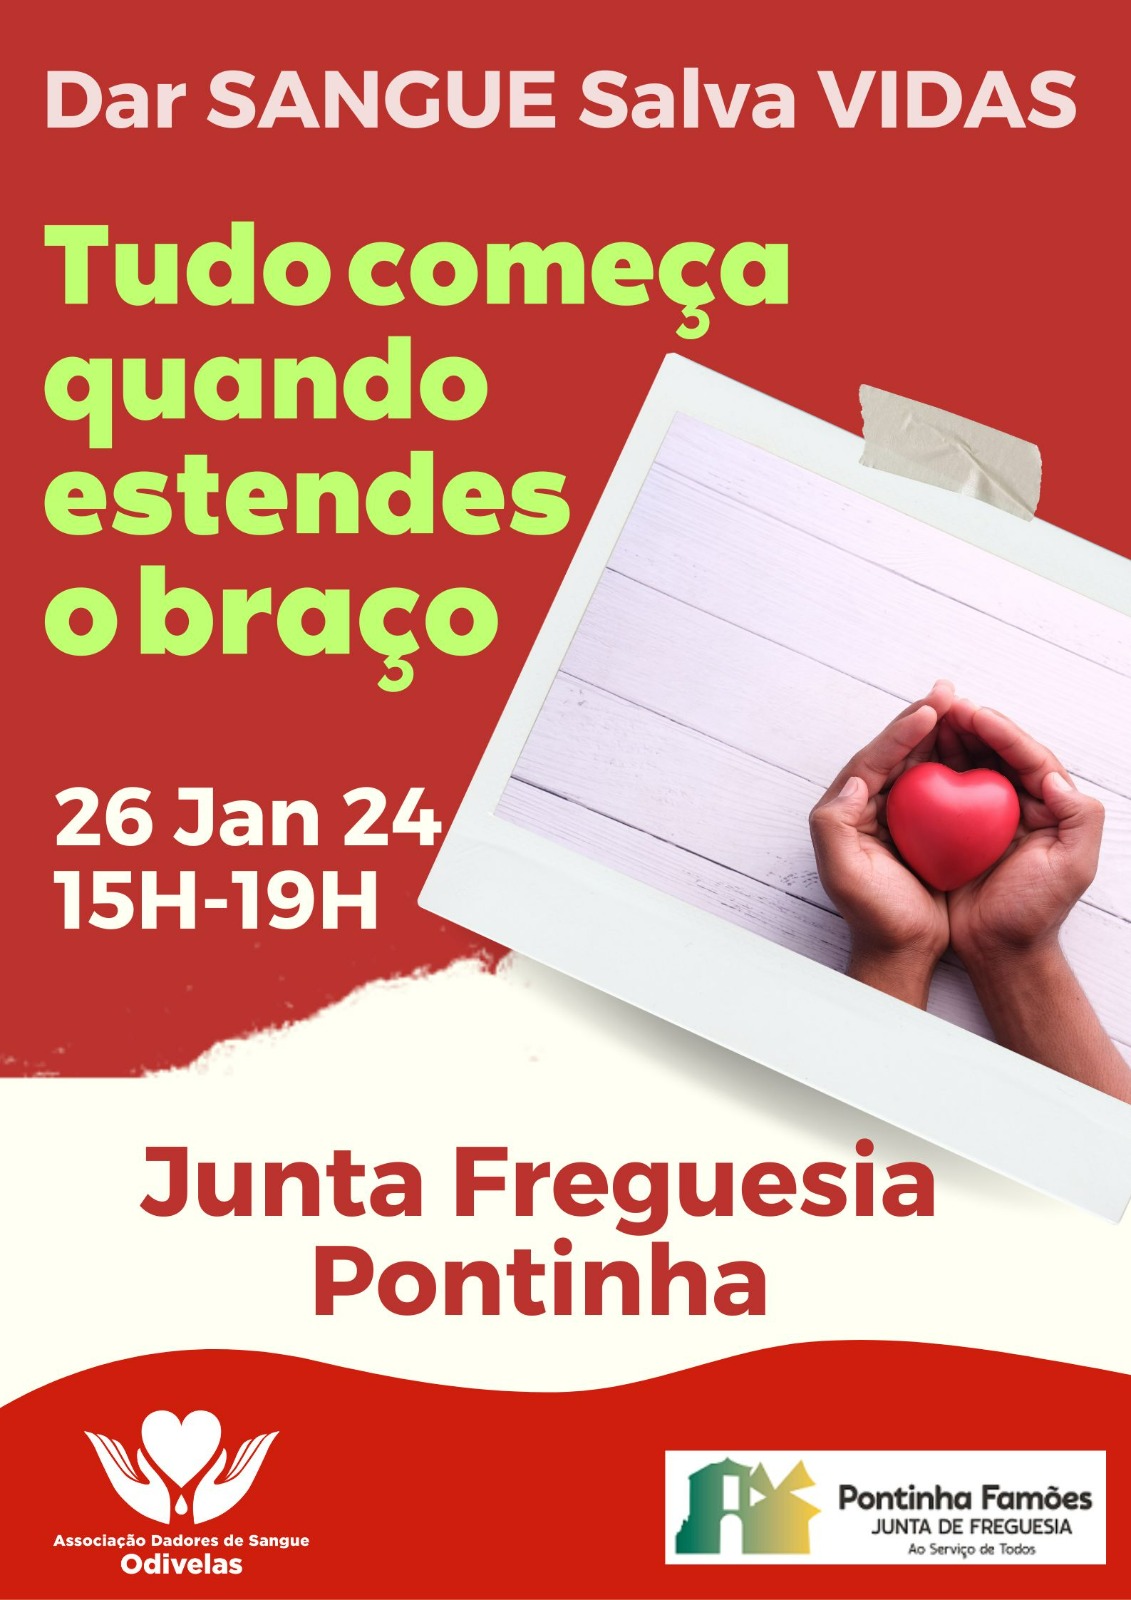 https://bo.jf-pontinhafamoes.pt/FileUploads/eventos/cartaz-26-janeiro.jpg